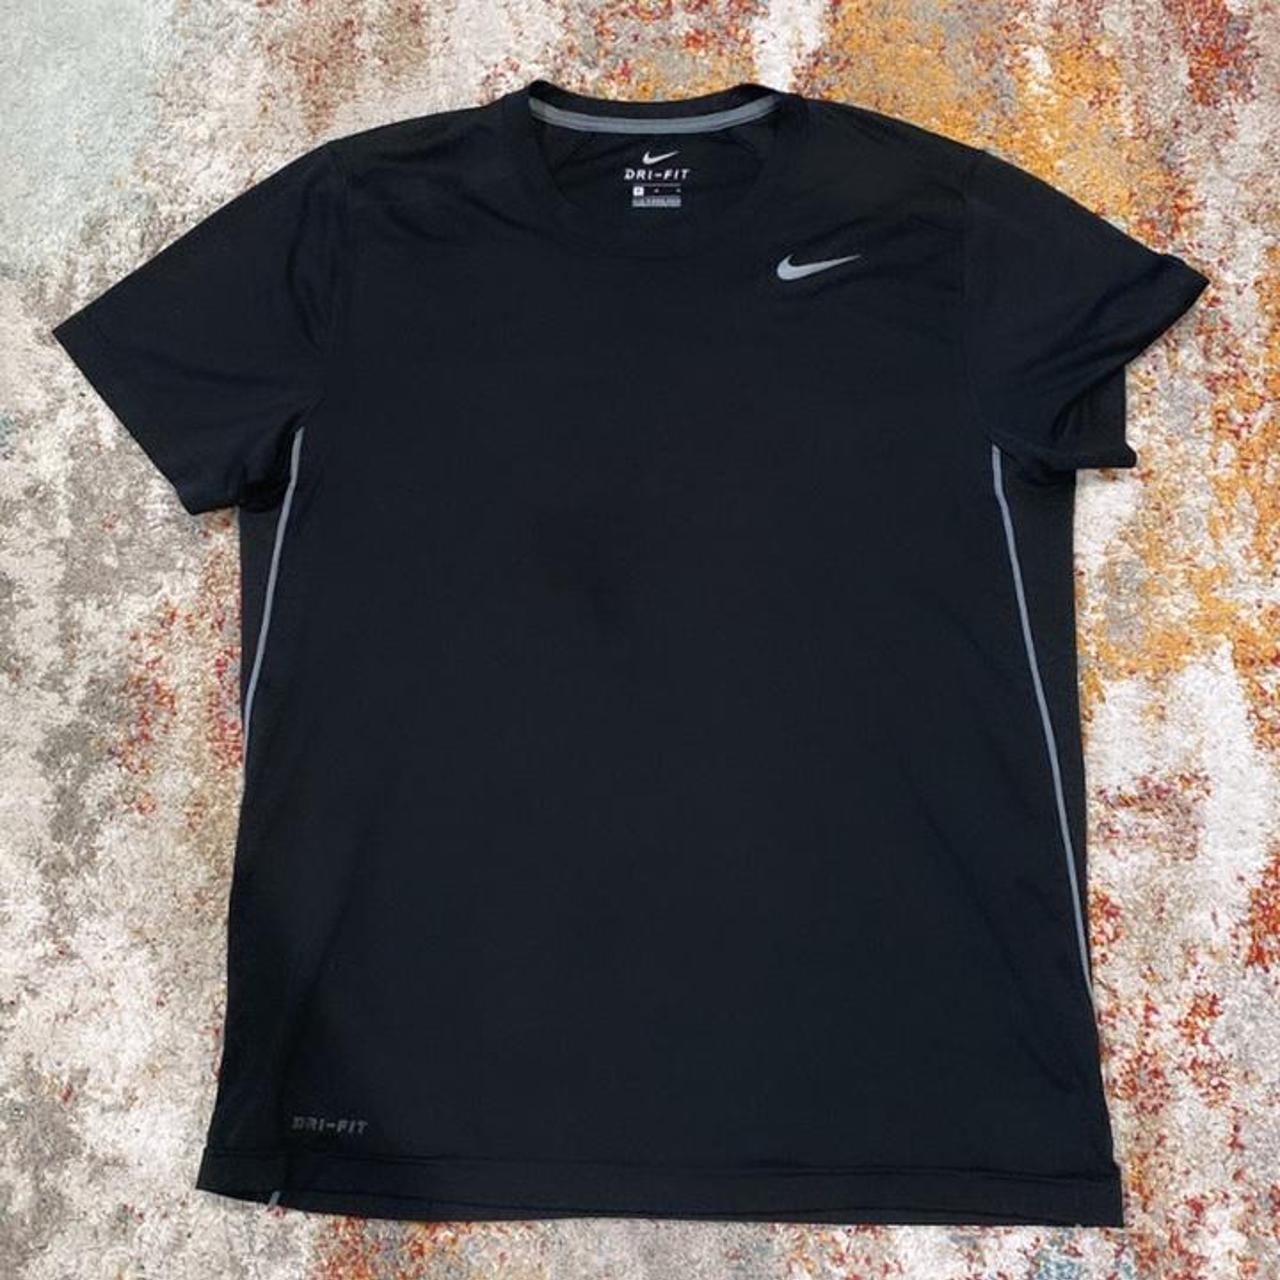 Nike running t shirt size medium - Depop